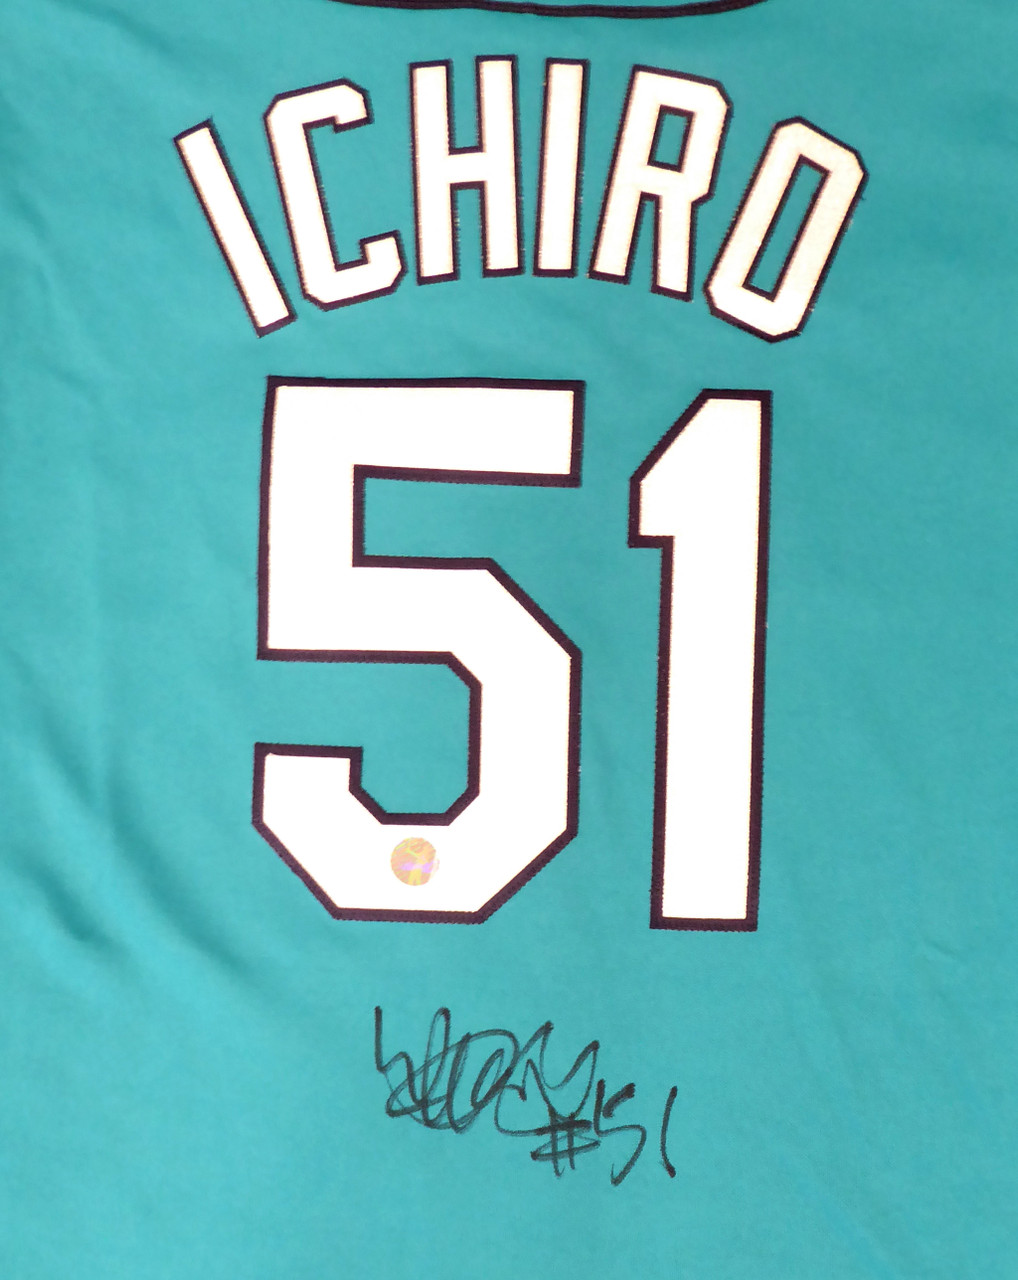 Ichiro Suzuki Autographed and Framed Seattle Mariners Jersey